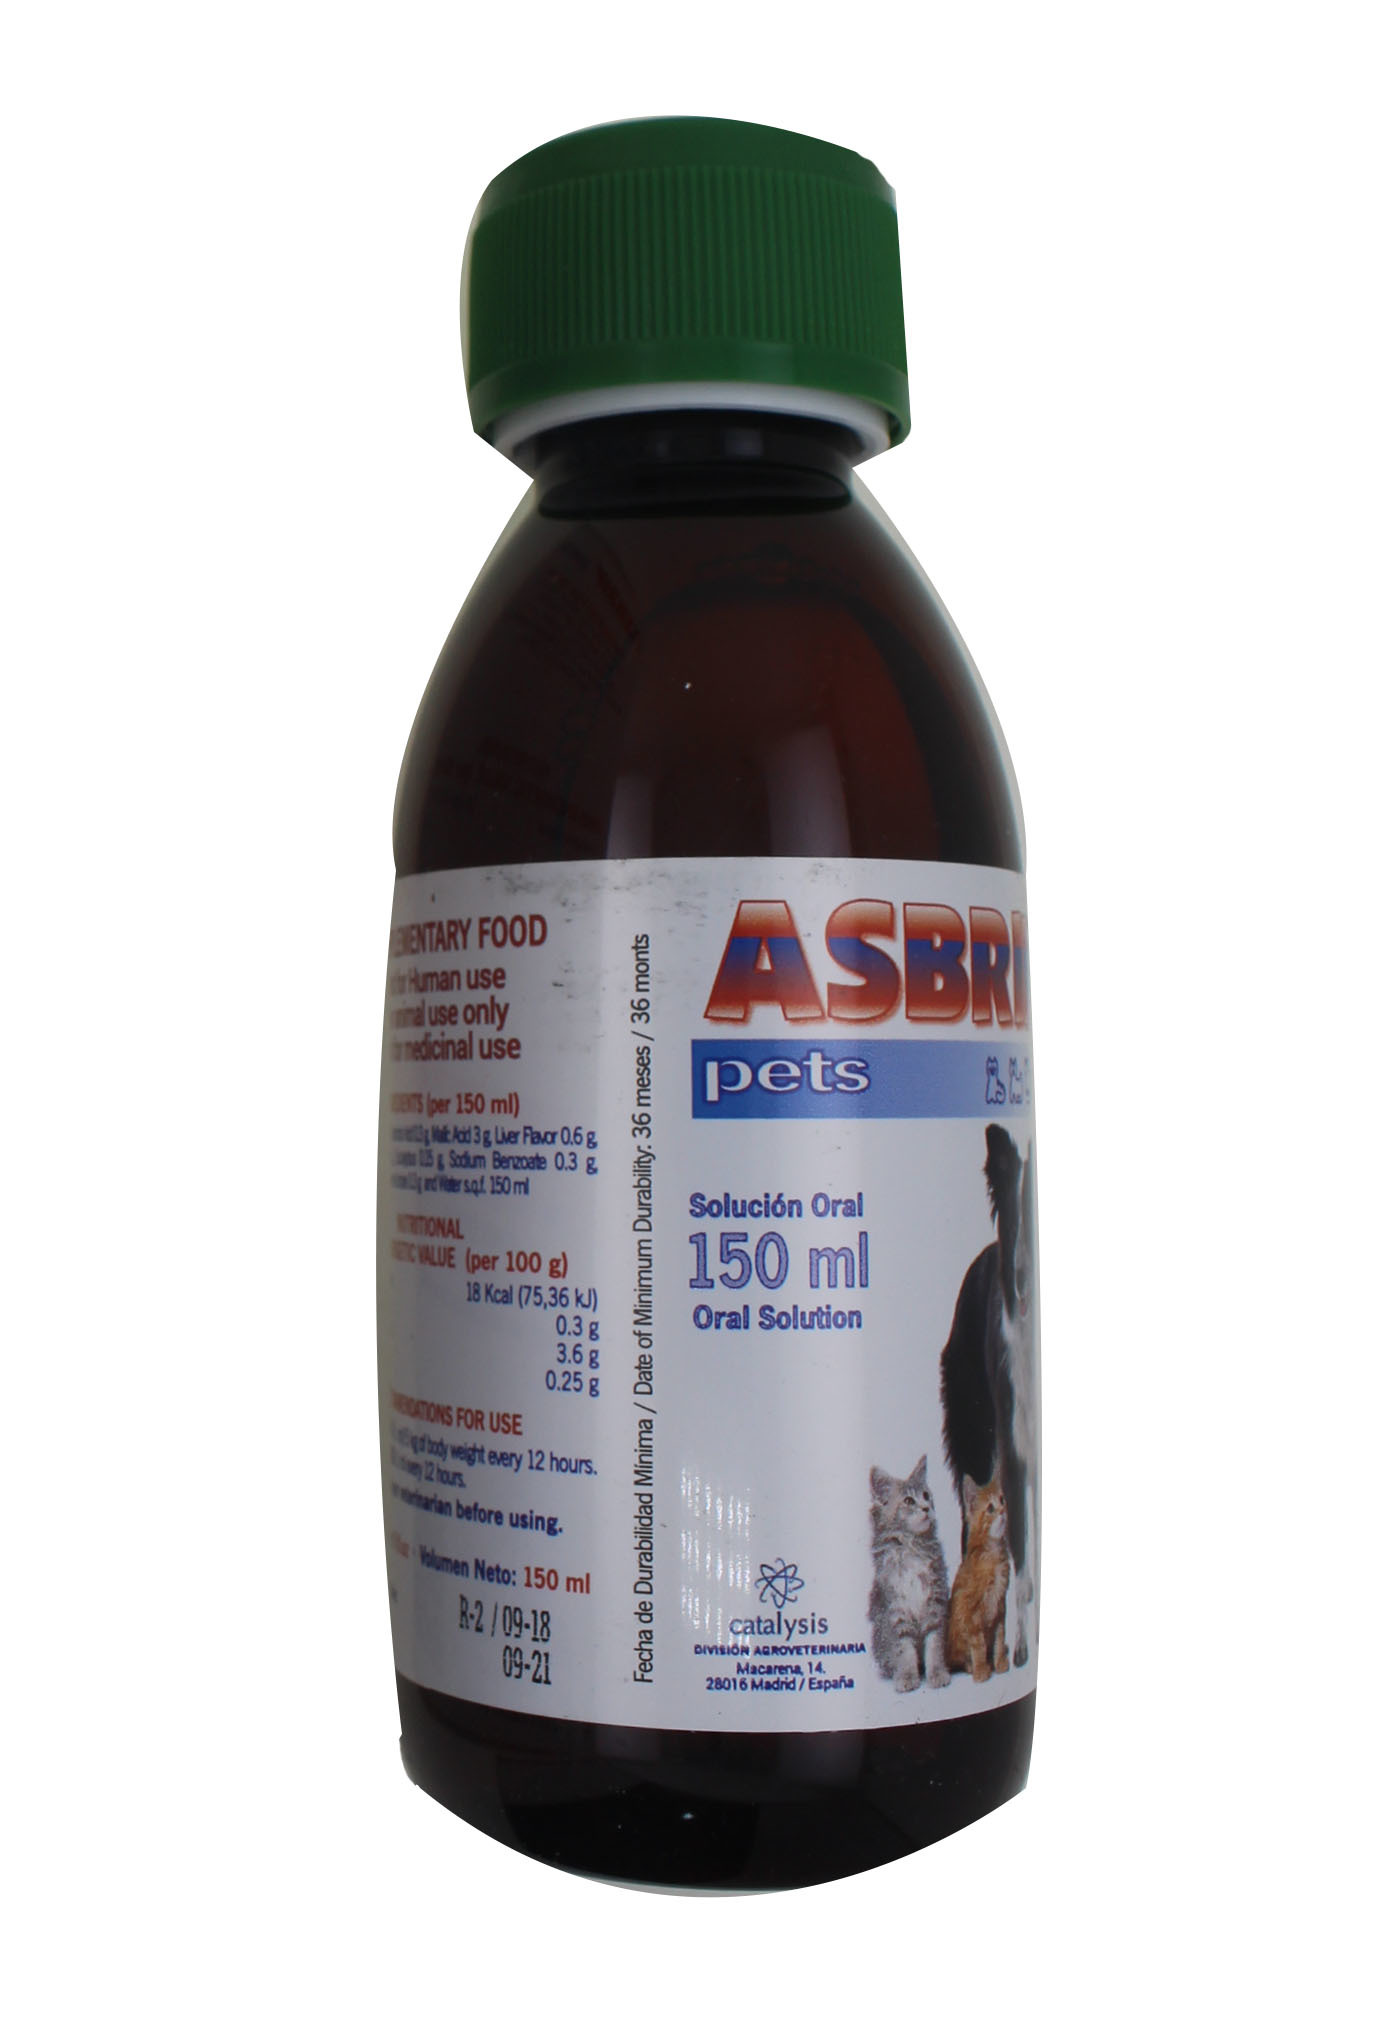 ASBRIP 150ML FOOD FOR PETS-FUMARIC ACID 1.5G+ASCORBIC ACI